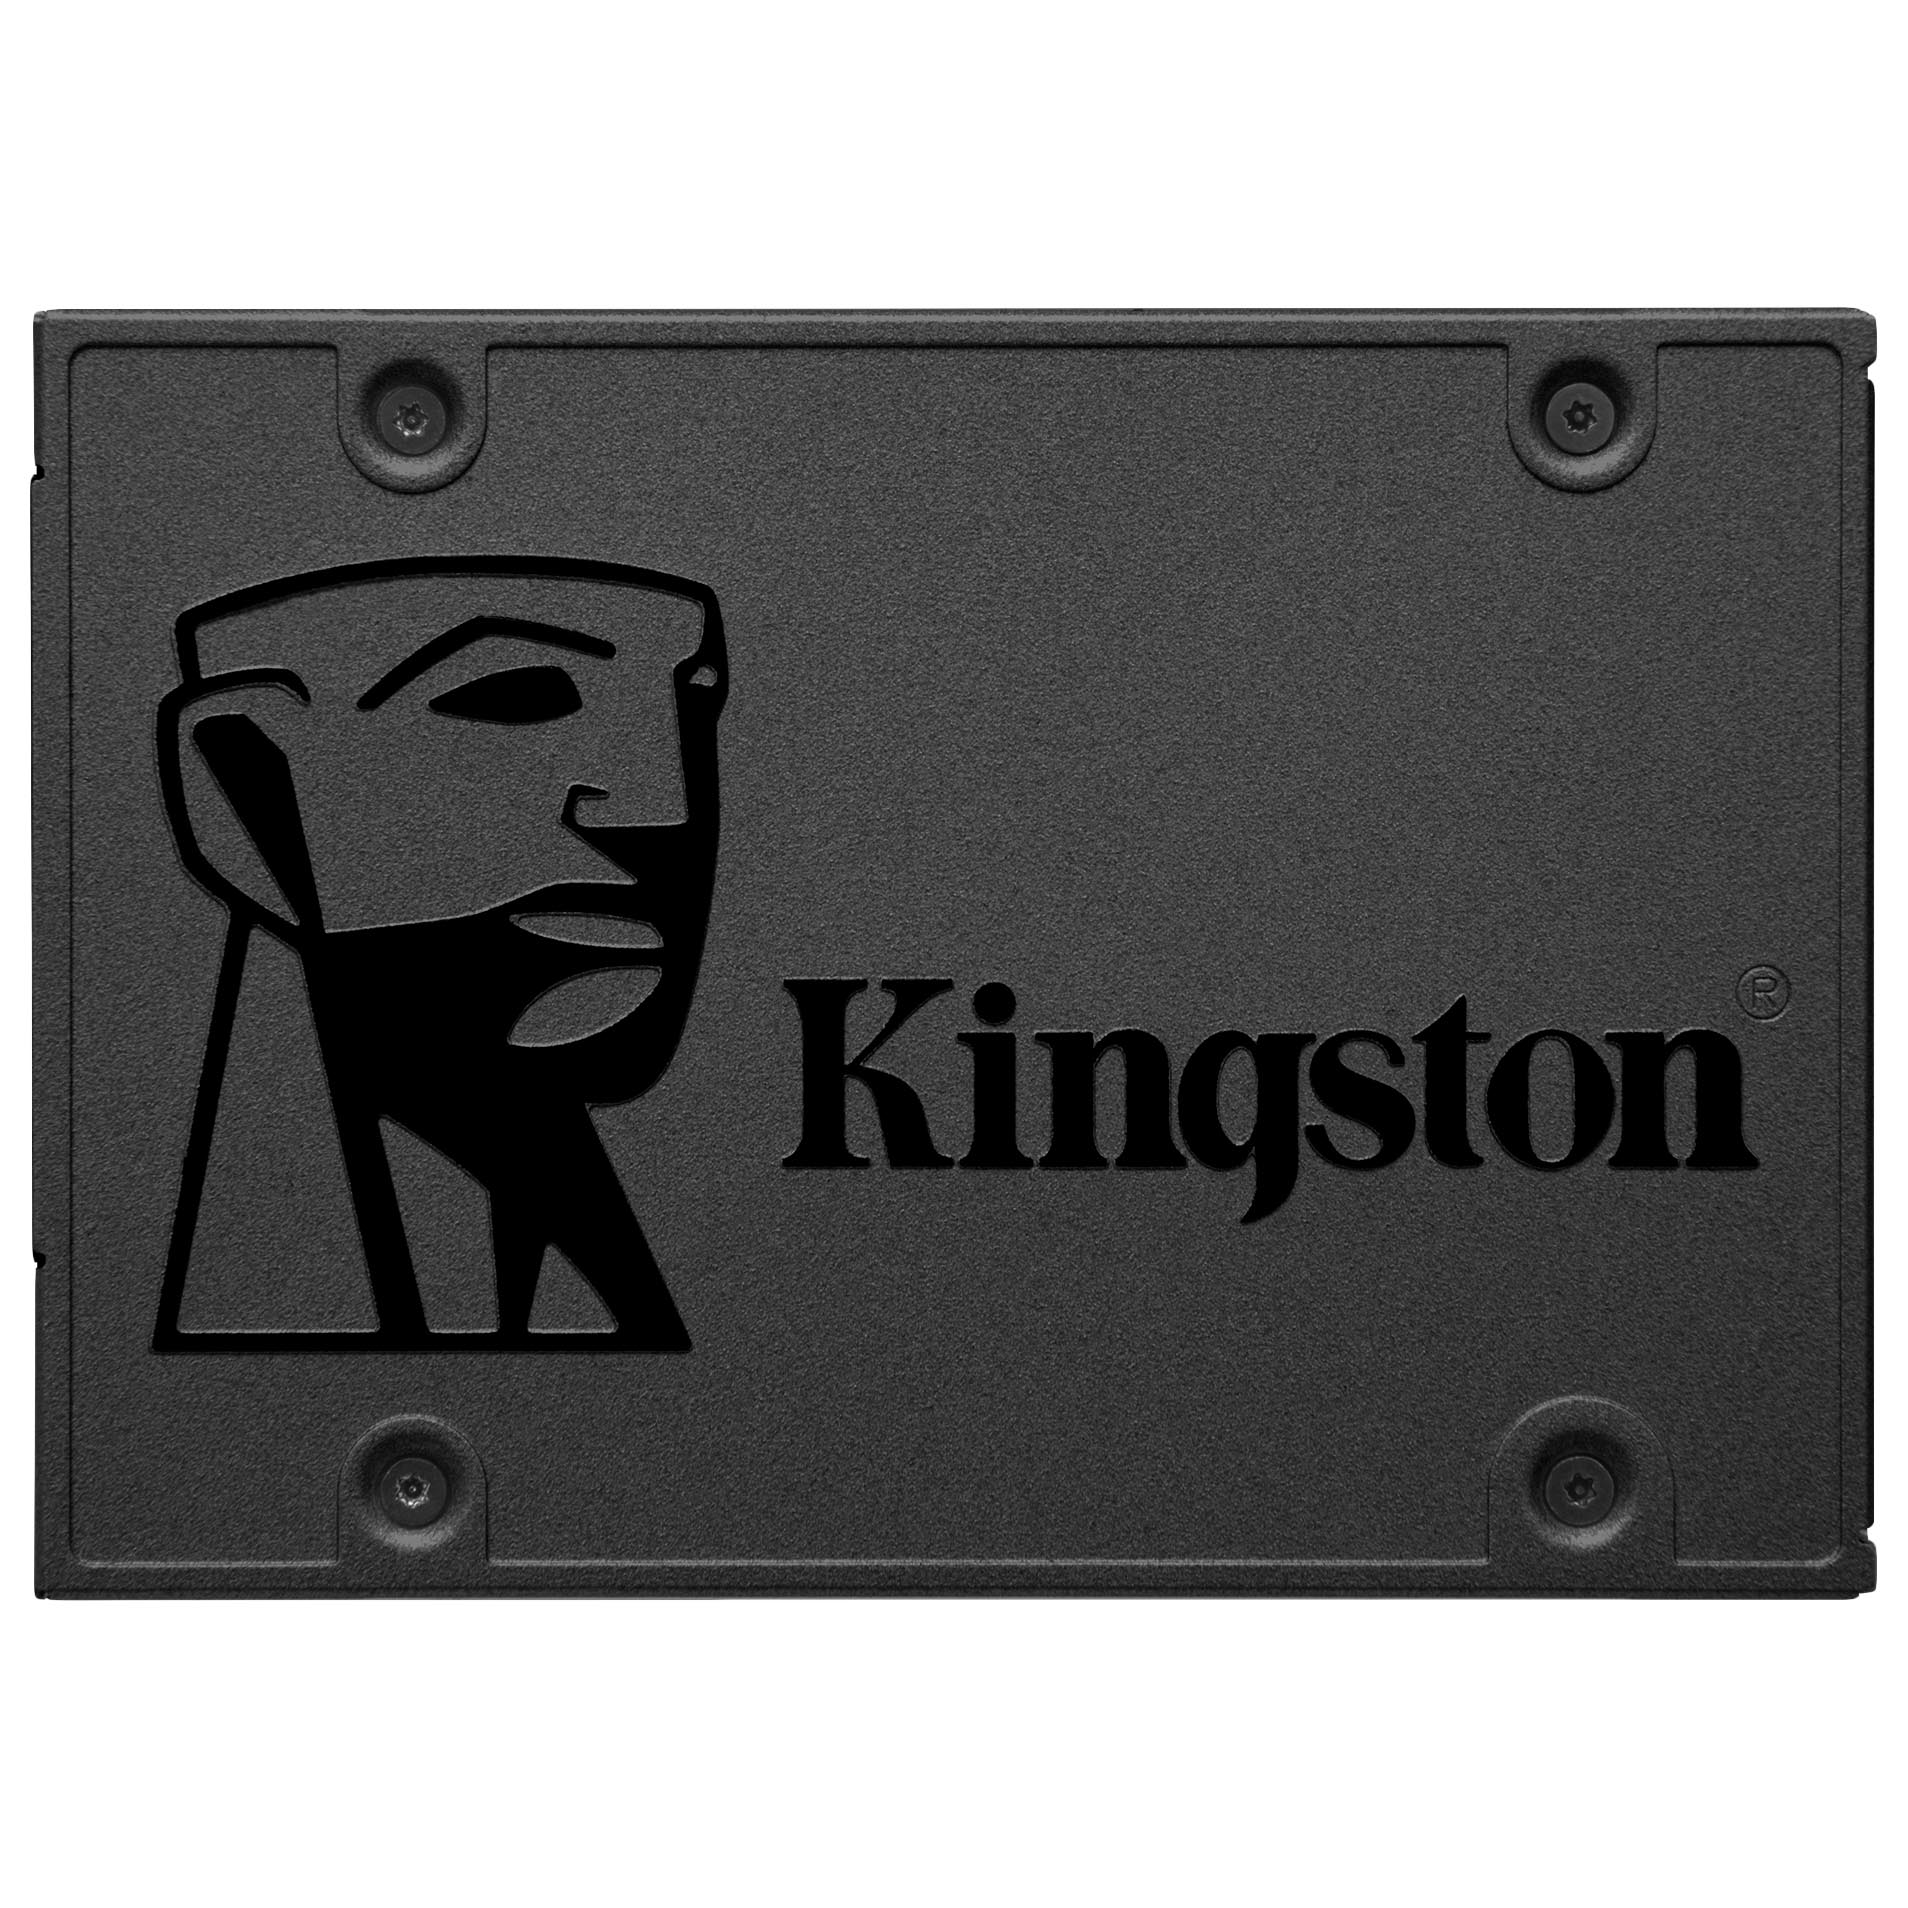 Внутренний твердотельный накопитель Kingston A400, SA400S37/240G, 240Гб, 2,5 внутренний ssd накопитель kingston 120gb a400 sa400m8 120g